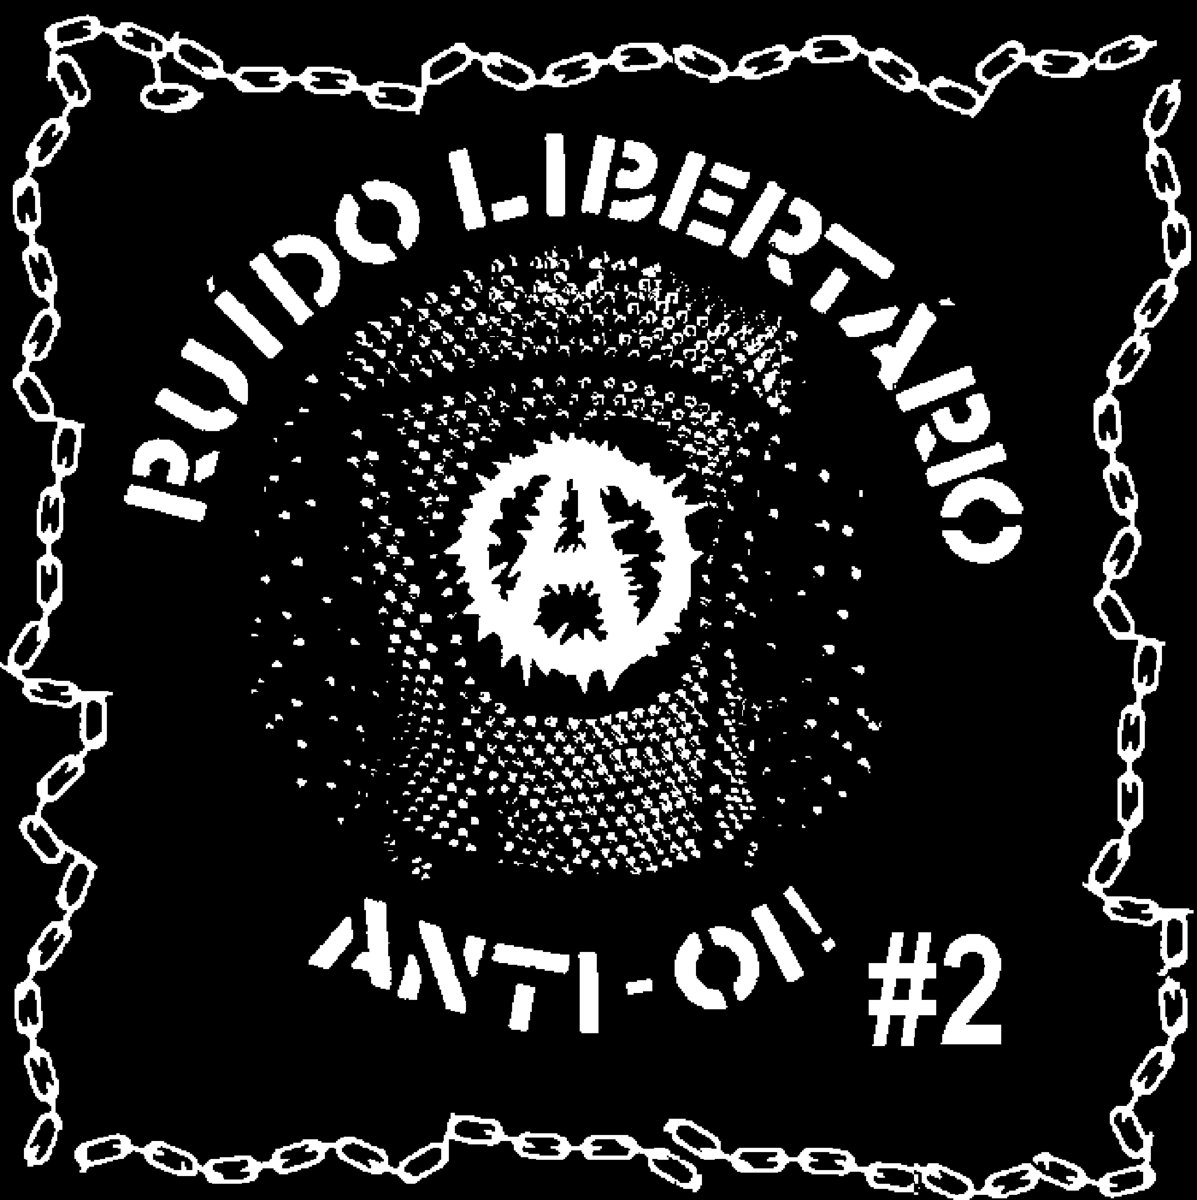 V.A. – Ruído Libertário Anti-OI! #2